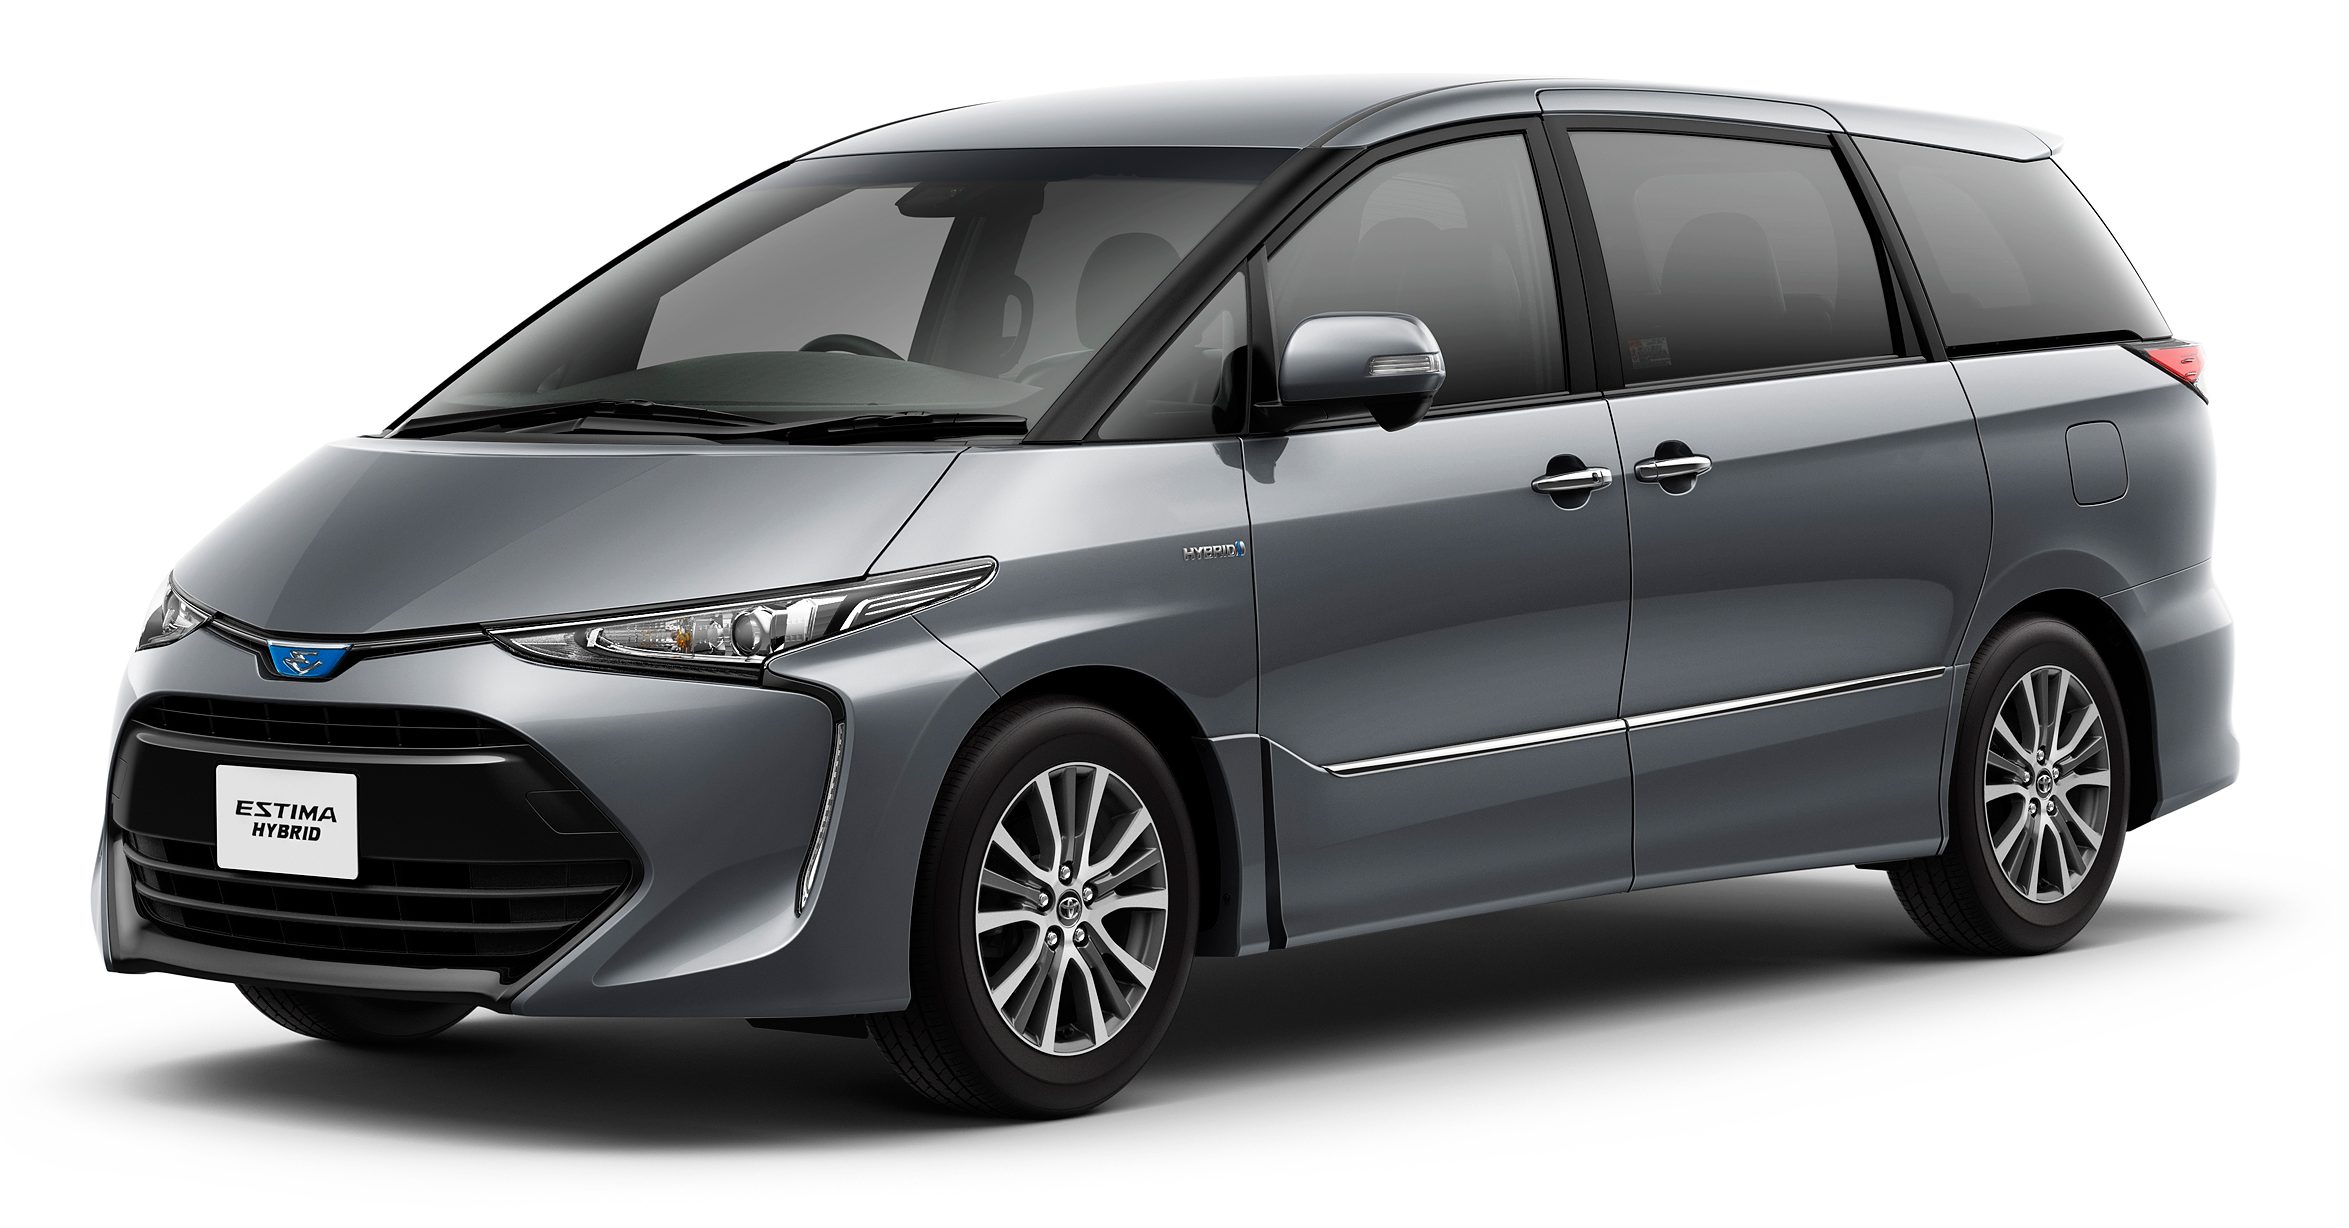 2016 Toyota Estima facelift officially revealed in Japan esth1606_08